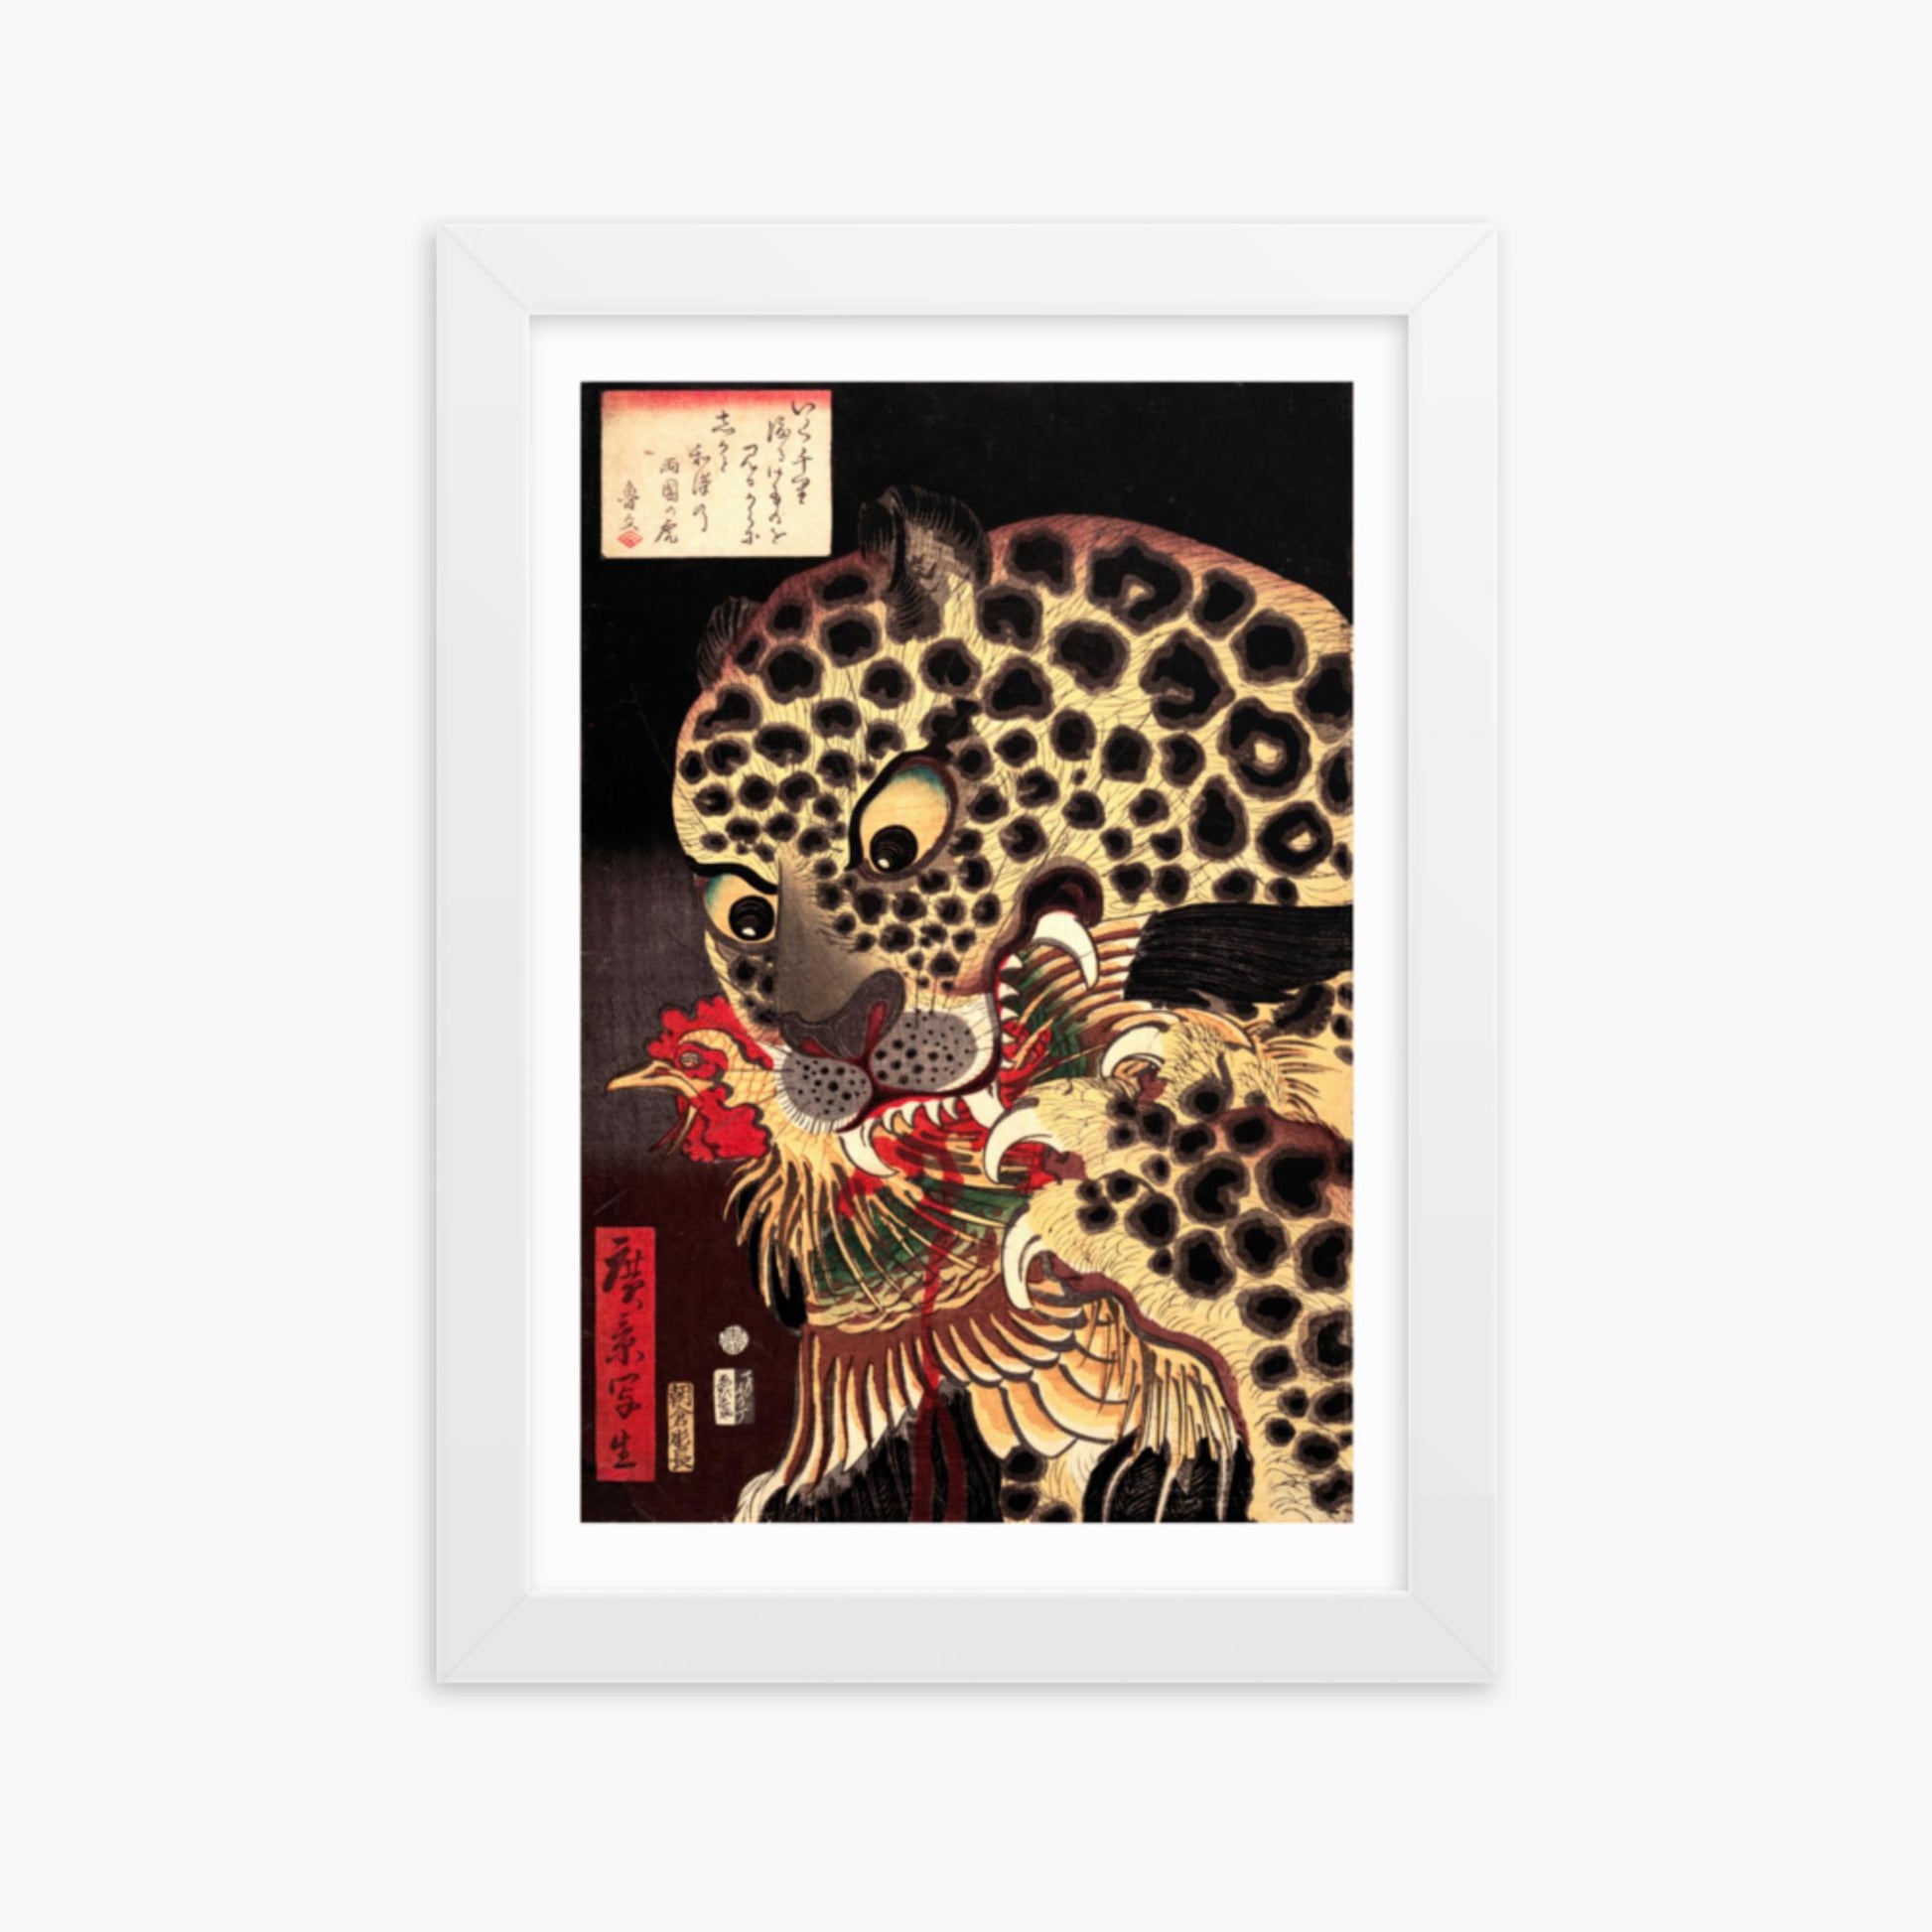 Utagawa Hirokage - The Tiger of Ryōkoku 21x30 cm Poster With White Frame